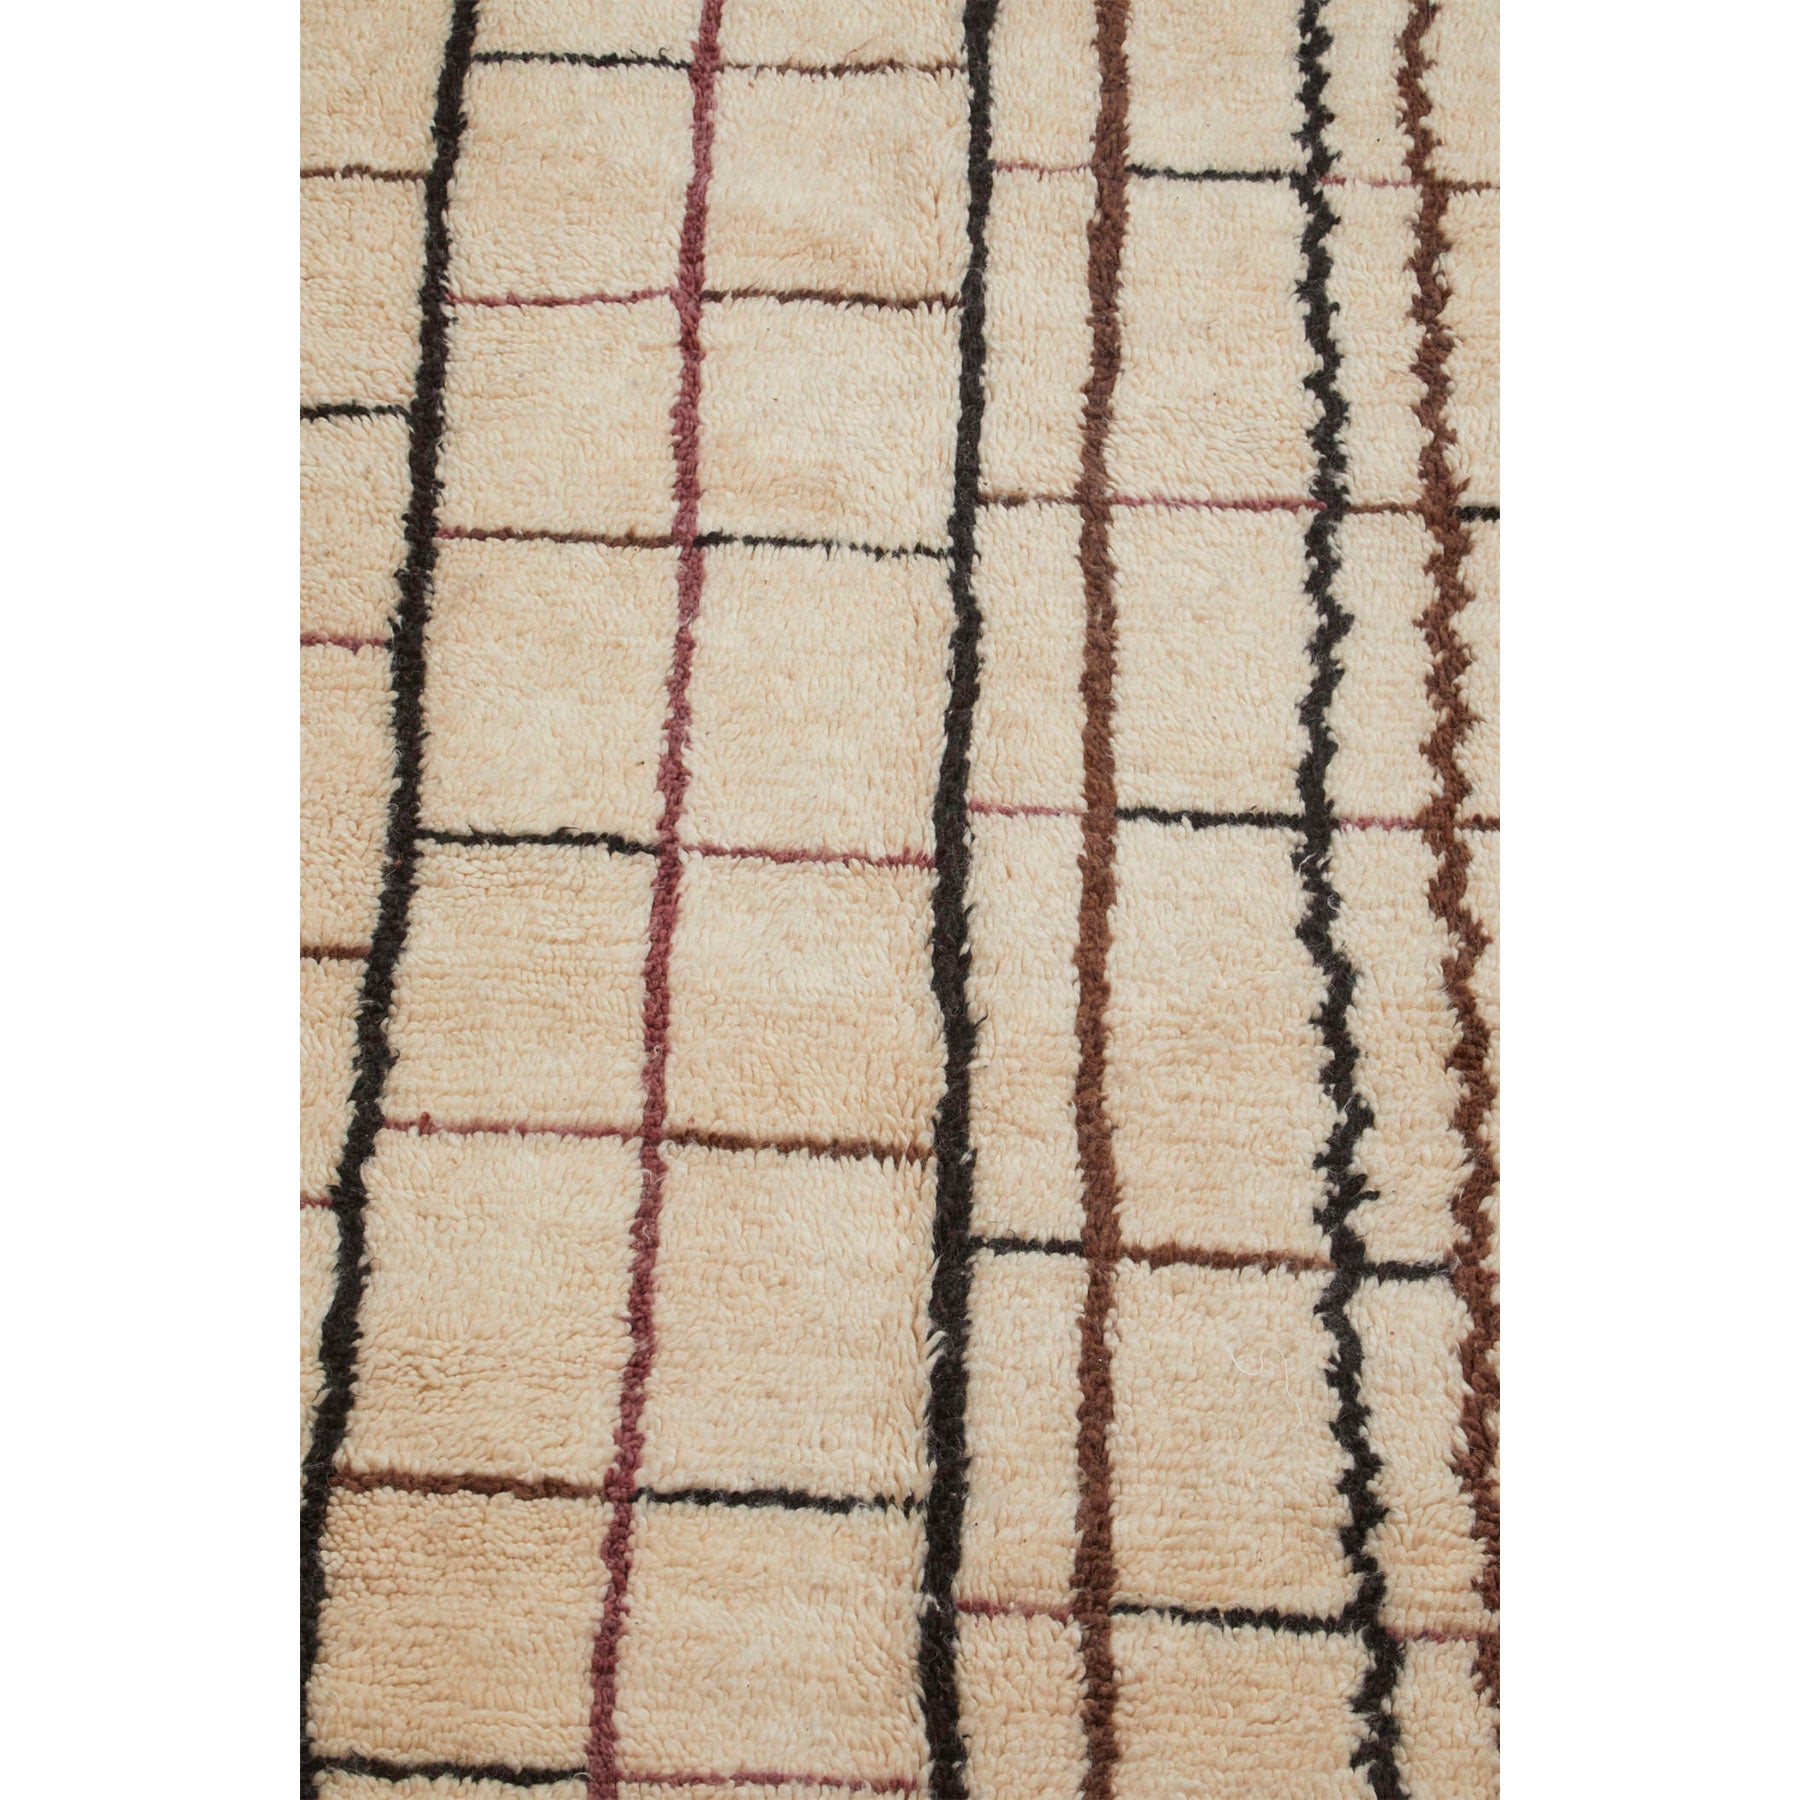 Striped Moroccan berber carpet in neutral colors - Kantara | Moroccan RUgs